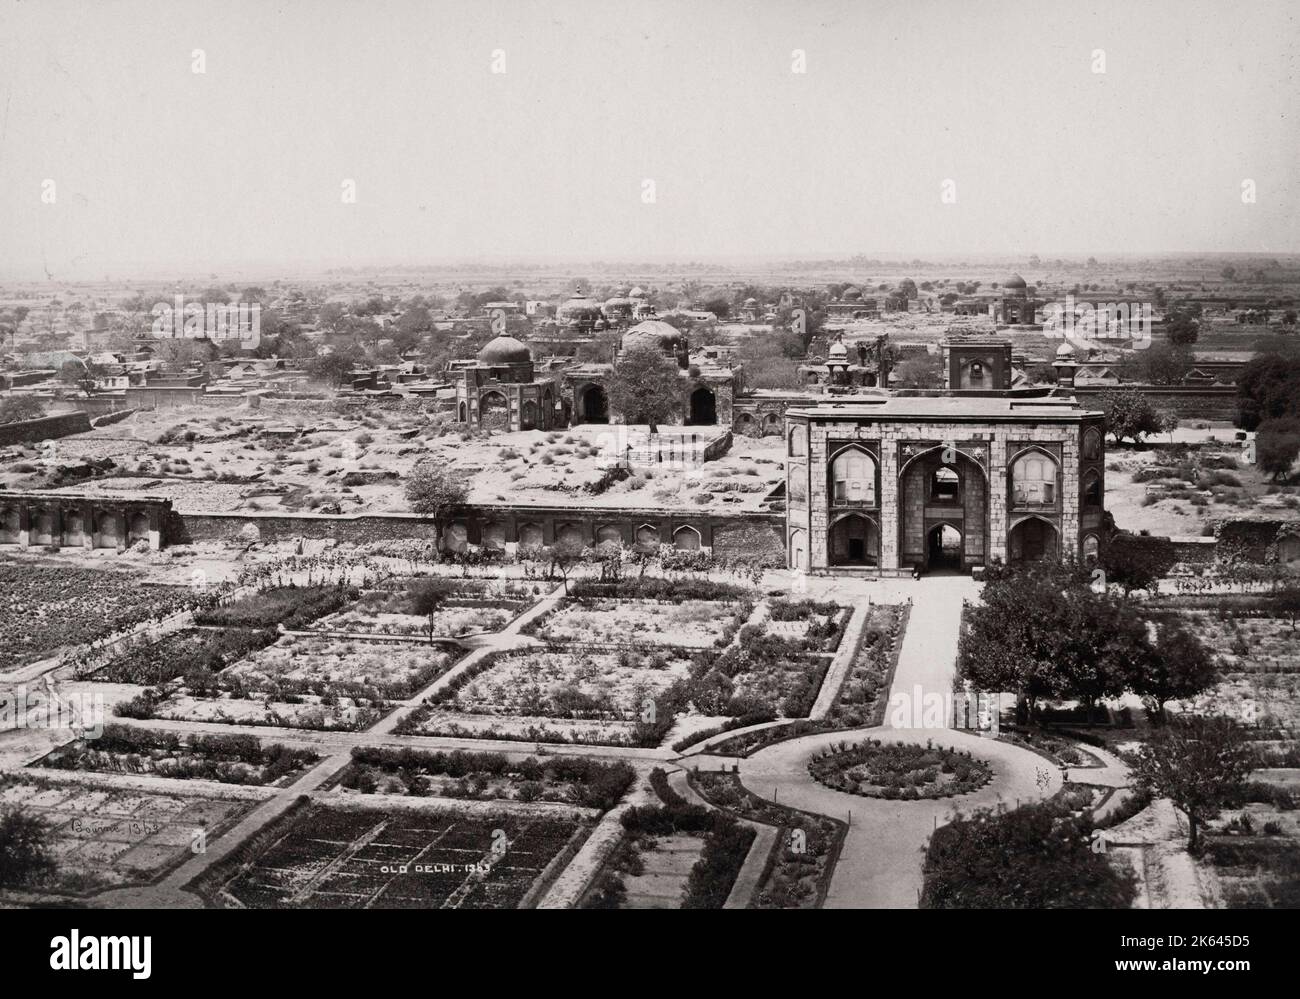 19th century vintage photograph: ruins of old Delhi, India, Samuel Bourne. Stock Photo